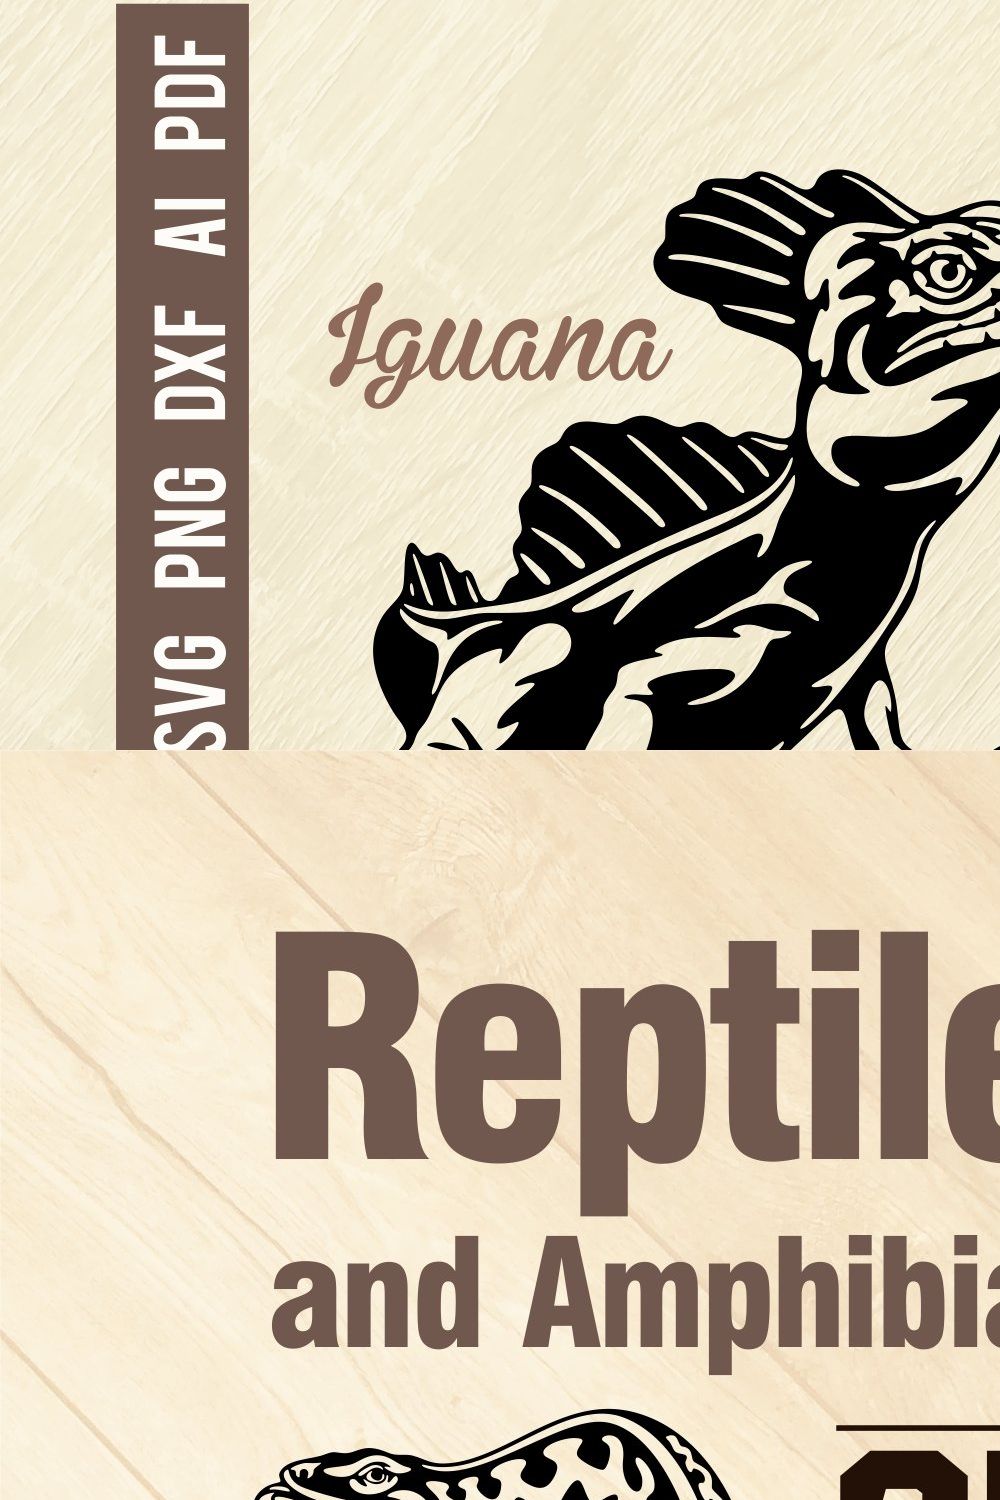 Iguana Reptiles Wild Animal Cut SVG pinterest preview image.